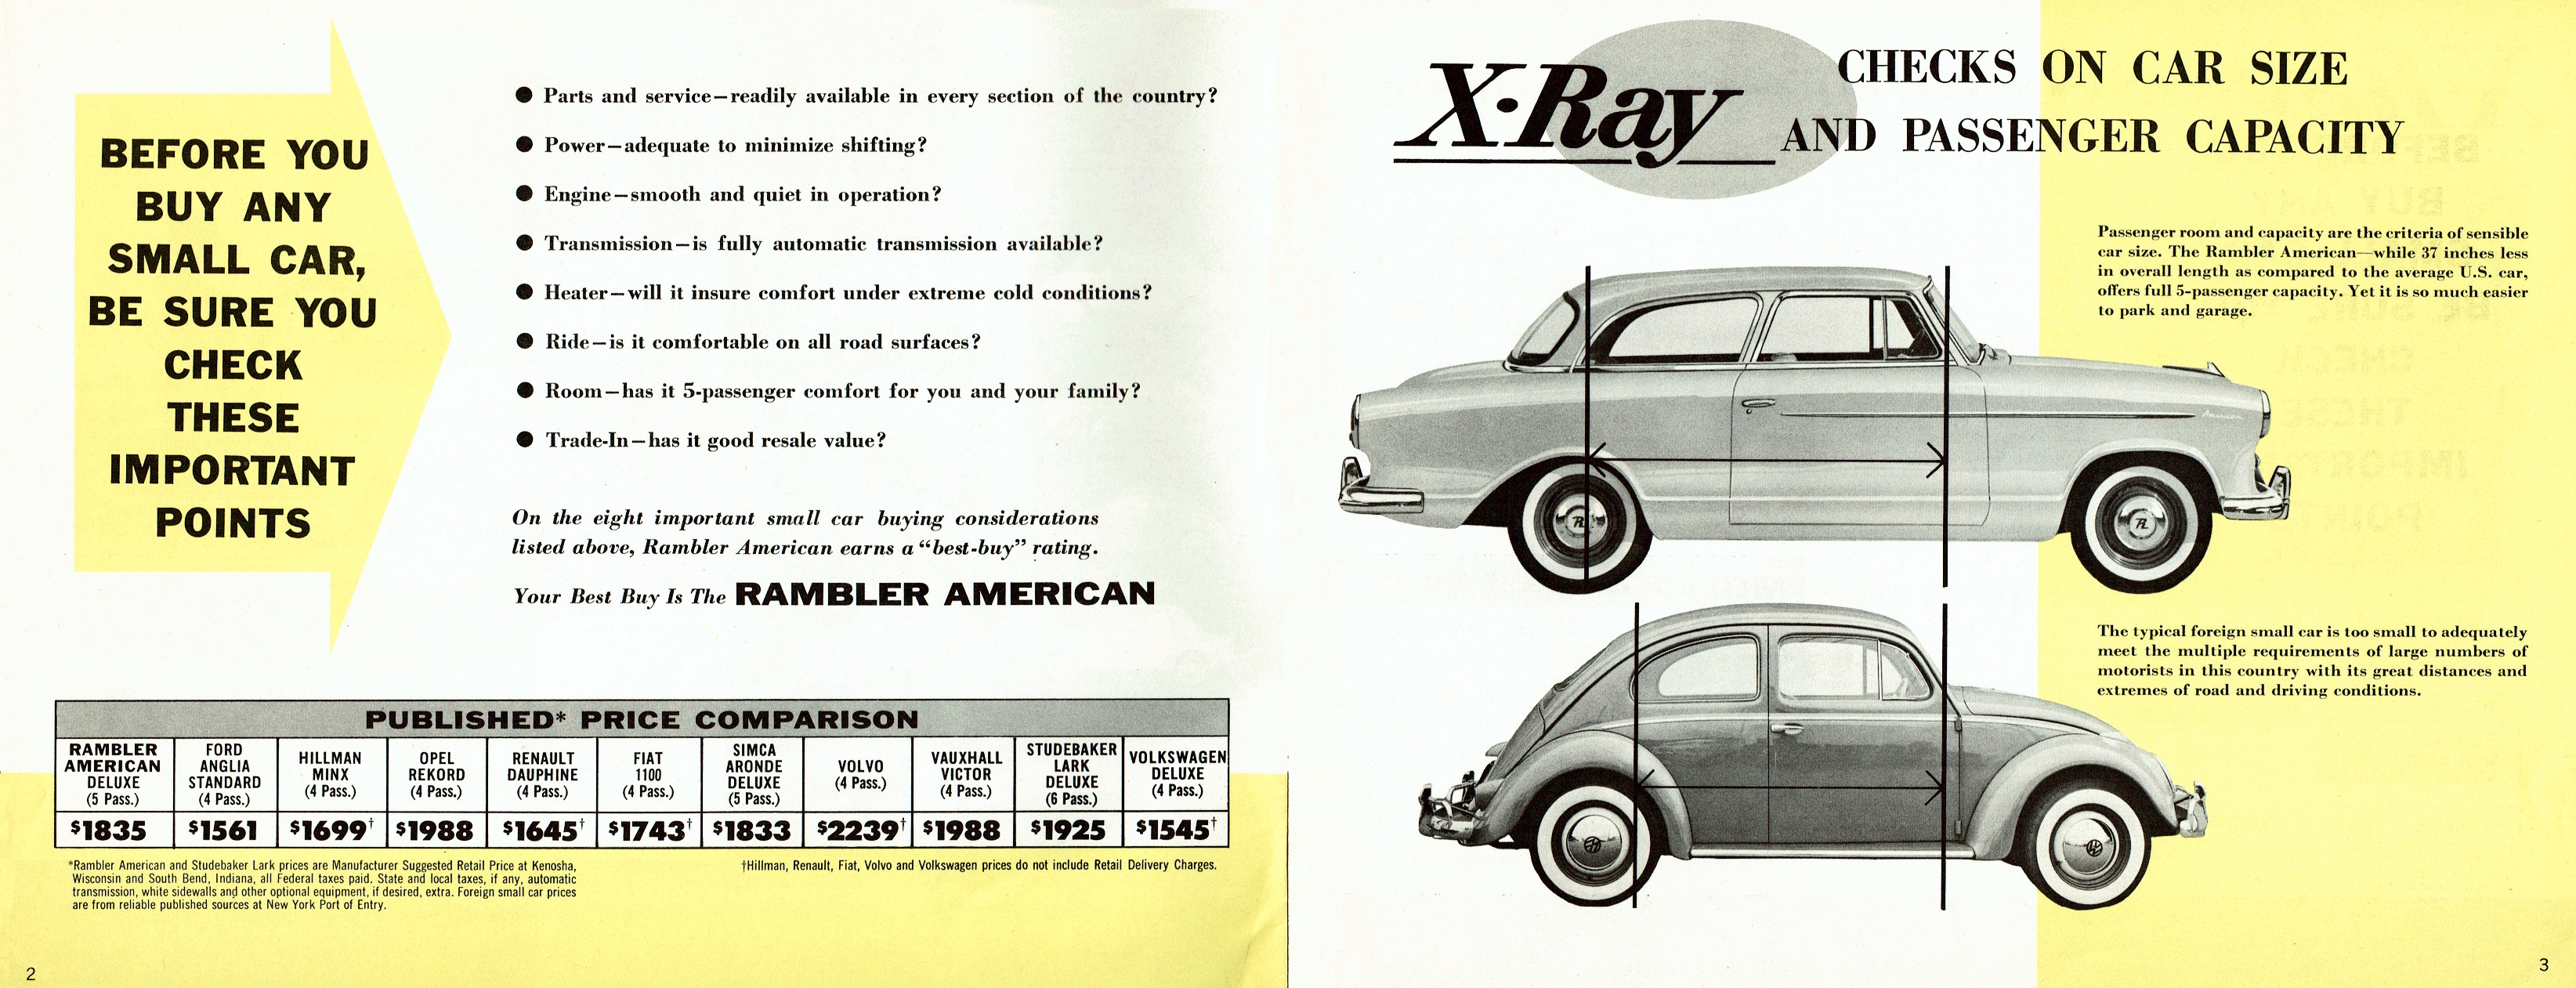 1959__X-Ray_American-02-03